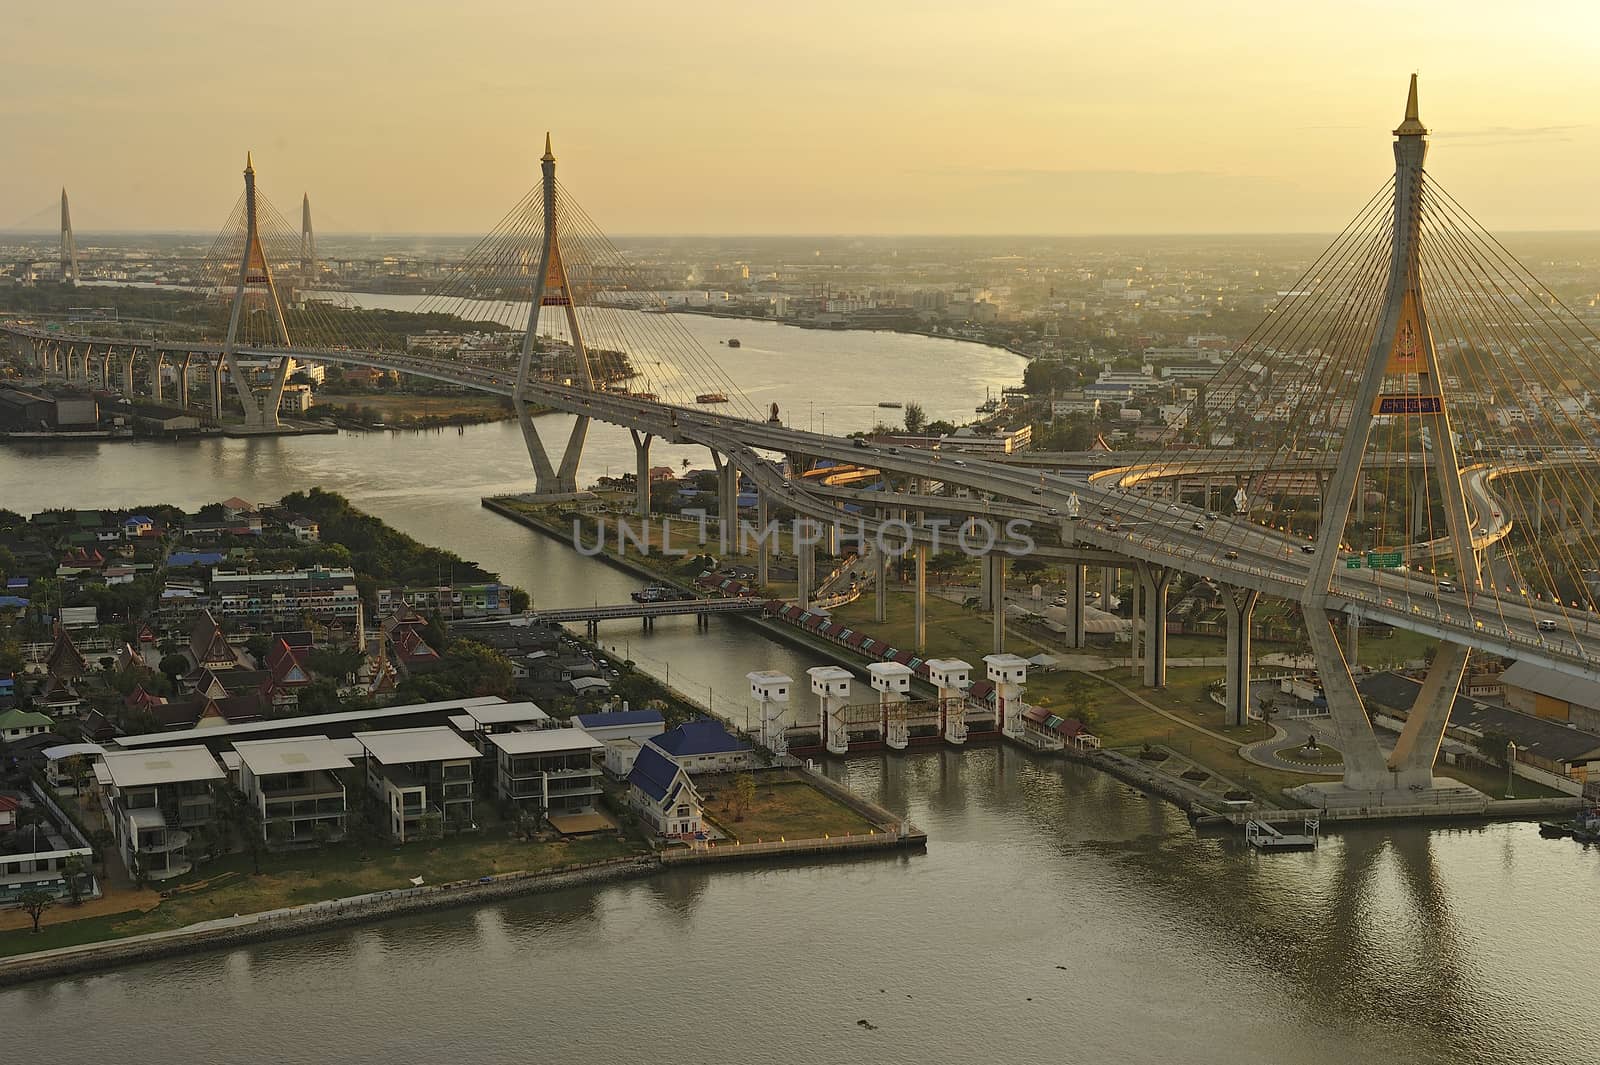 view of the Bhumibol bridge (Bangkok, Thailand) by think4photop